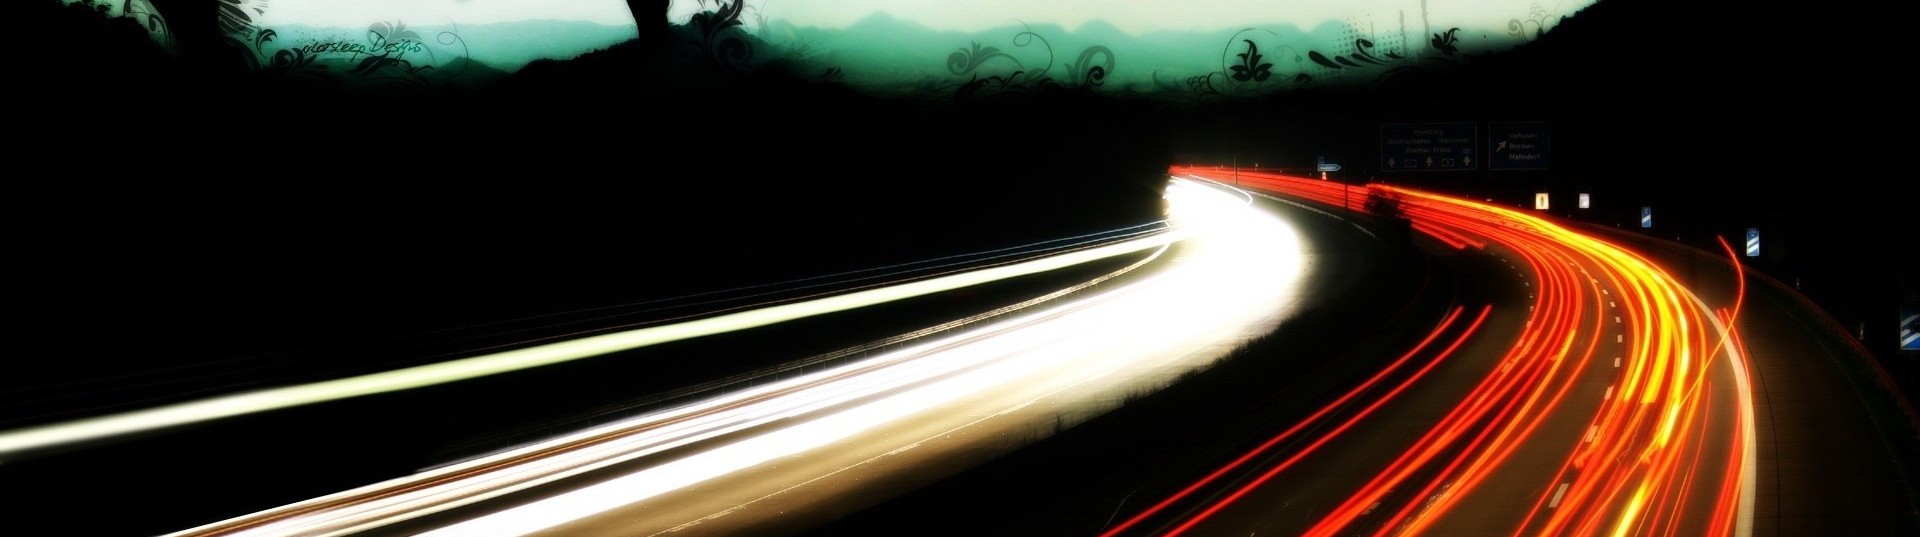 speed-lights-road